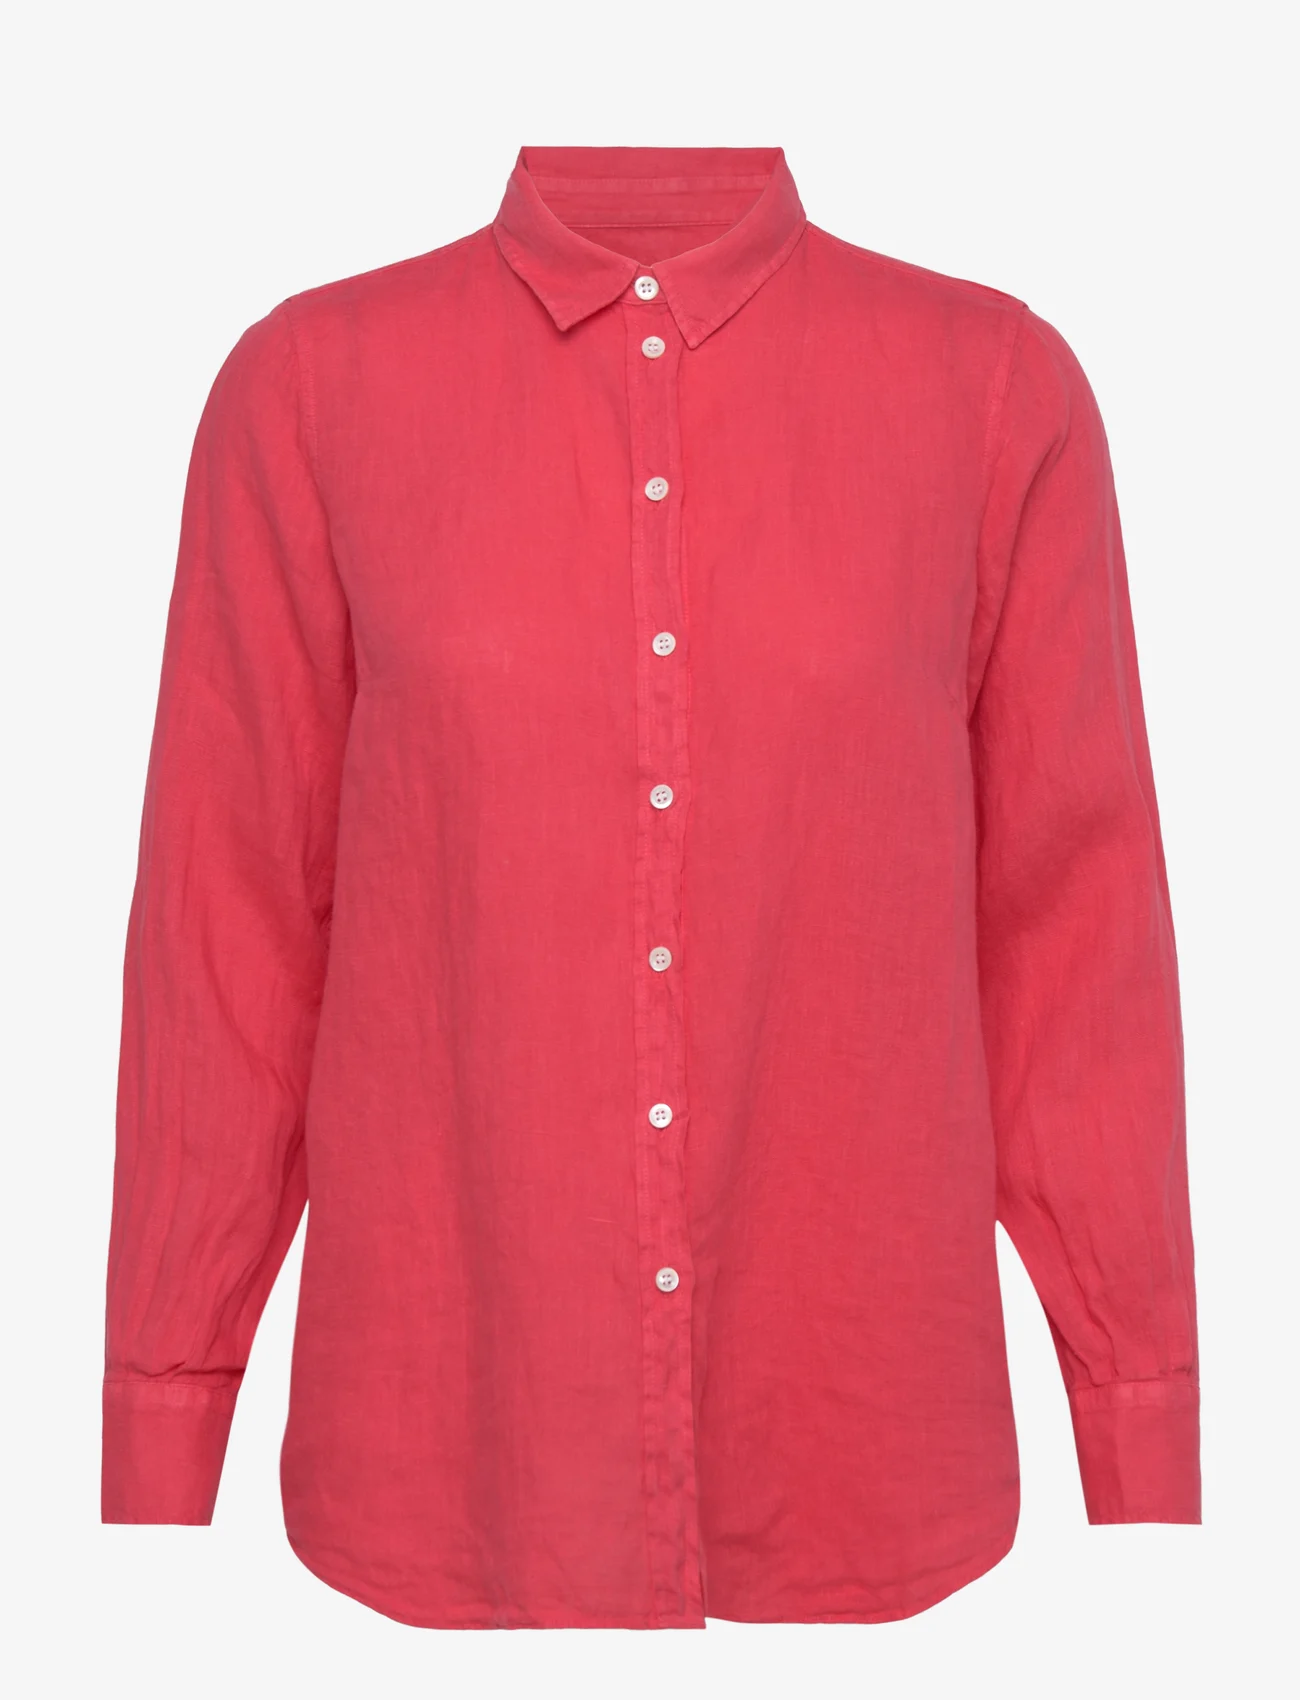 MOS MOSH - Karli Linen Shirt - linen shirts - teaberry - 0